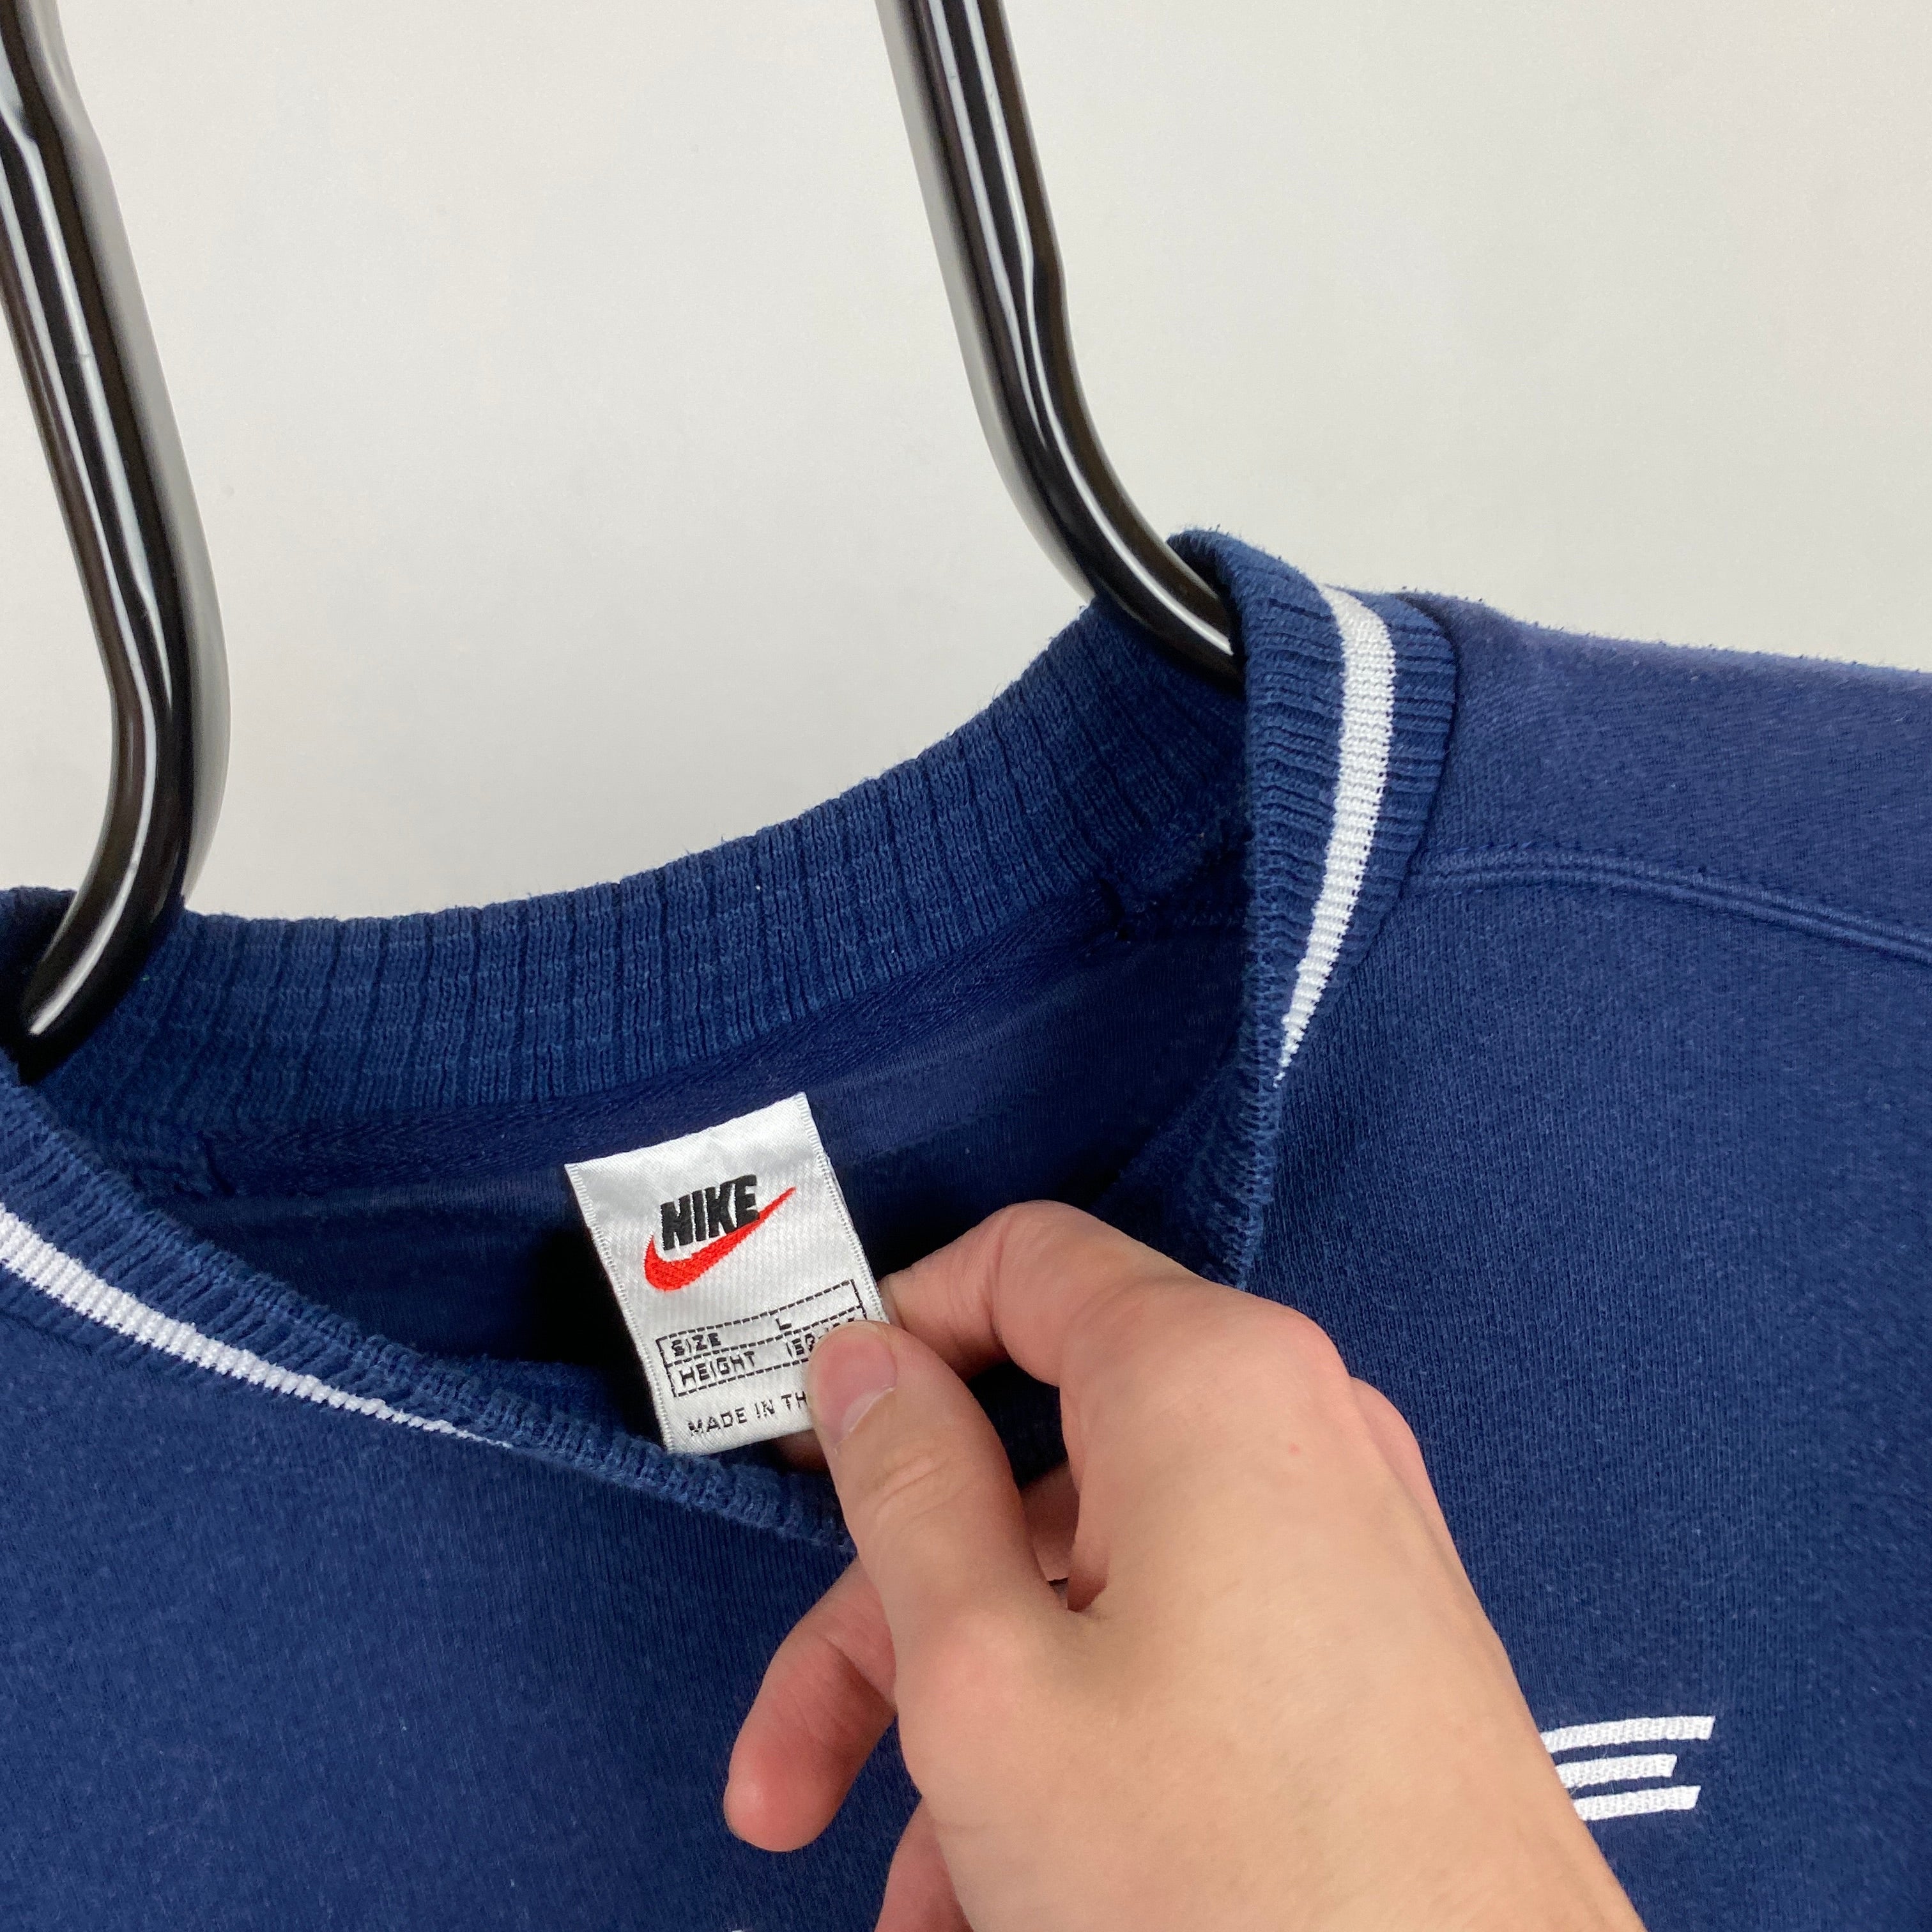 90s Nike Sweatshirt Blue XS